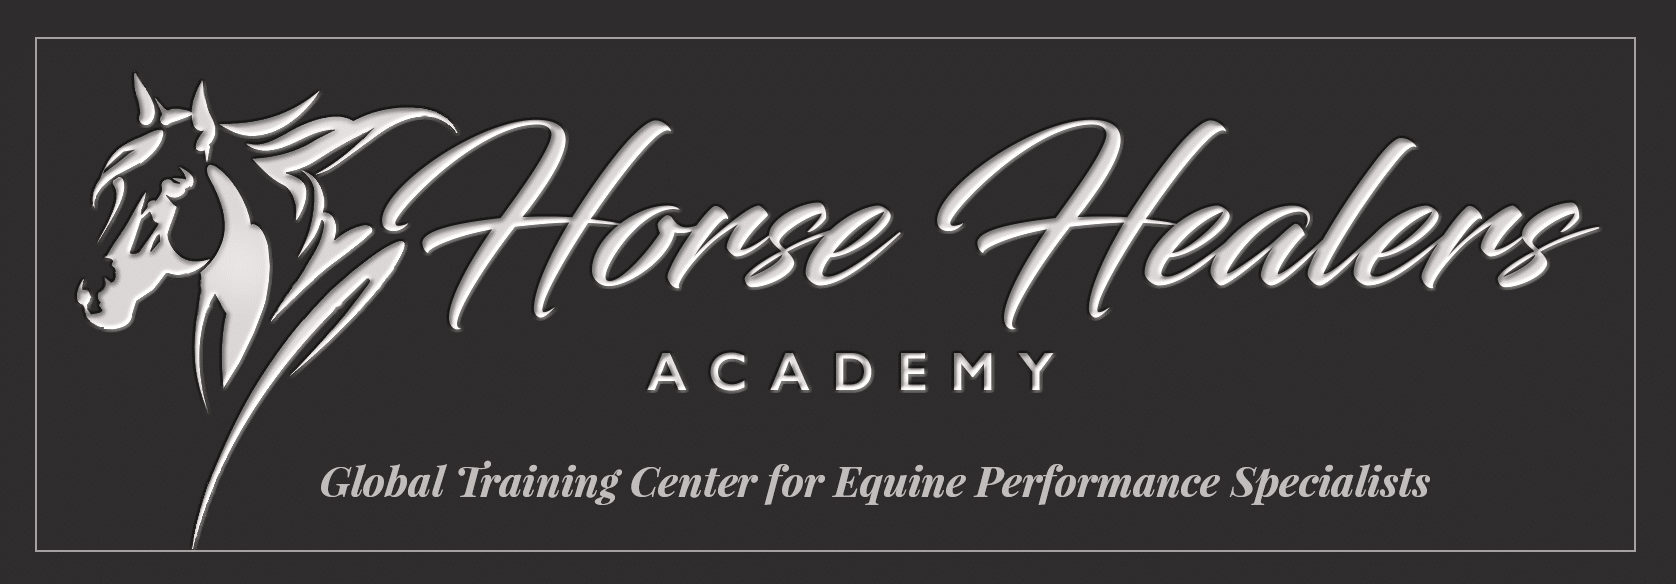 Horse Healers Academy